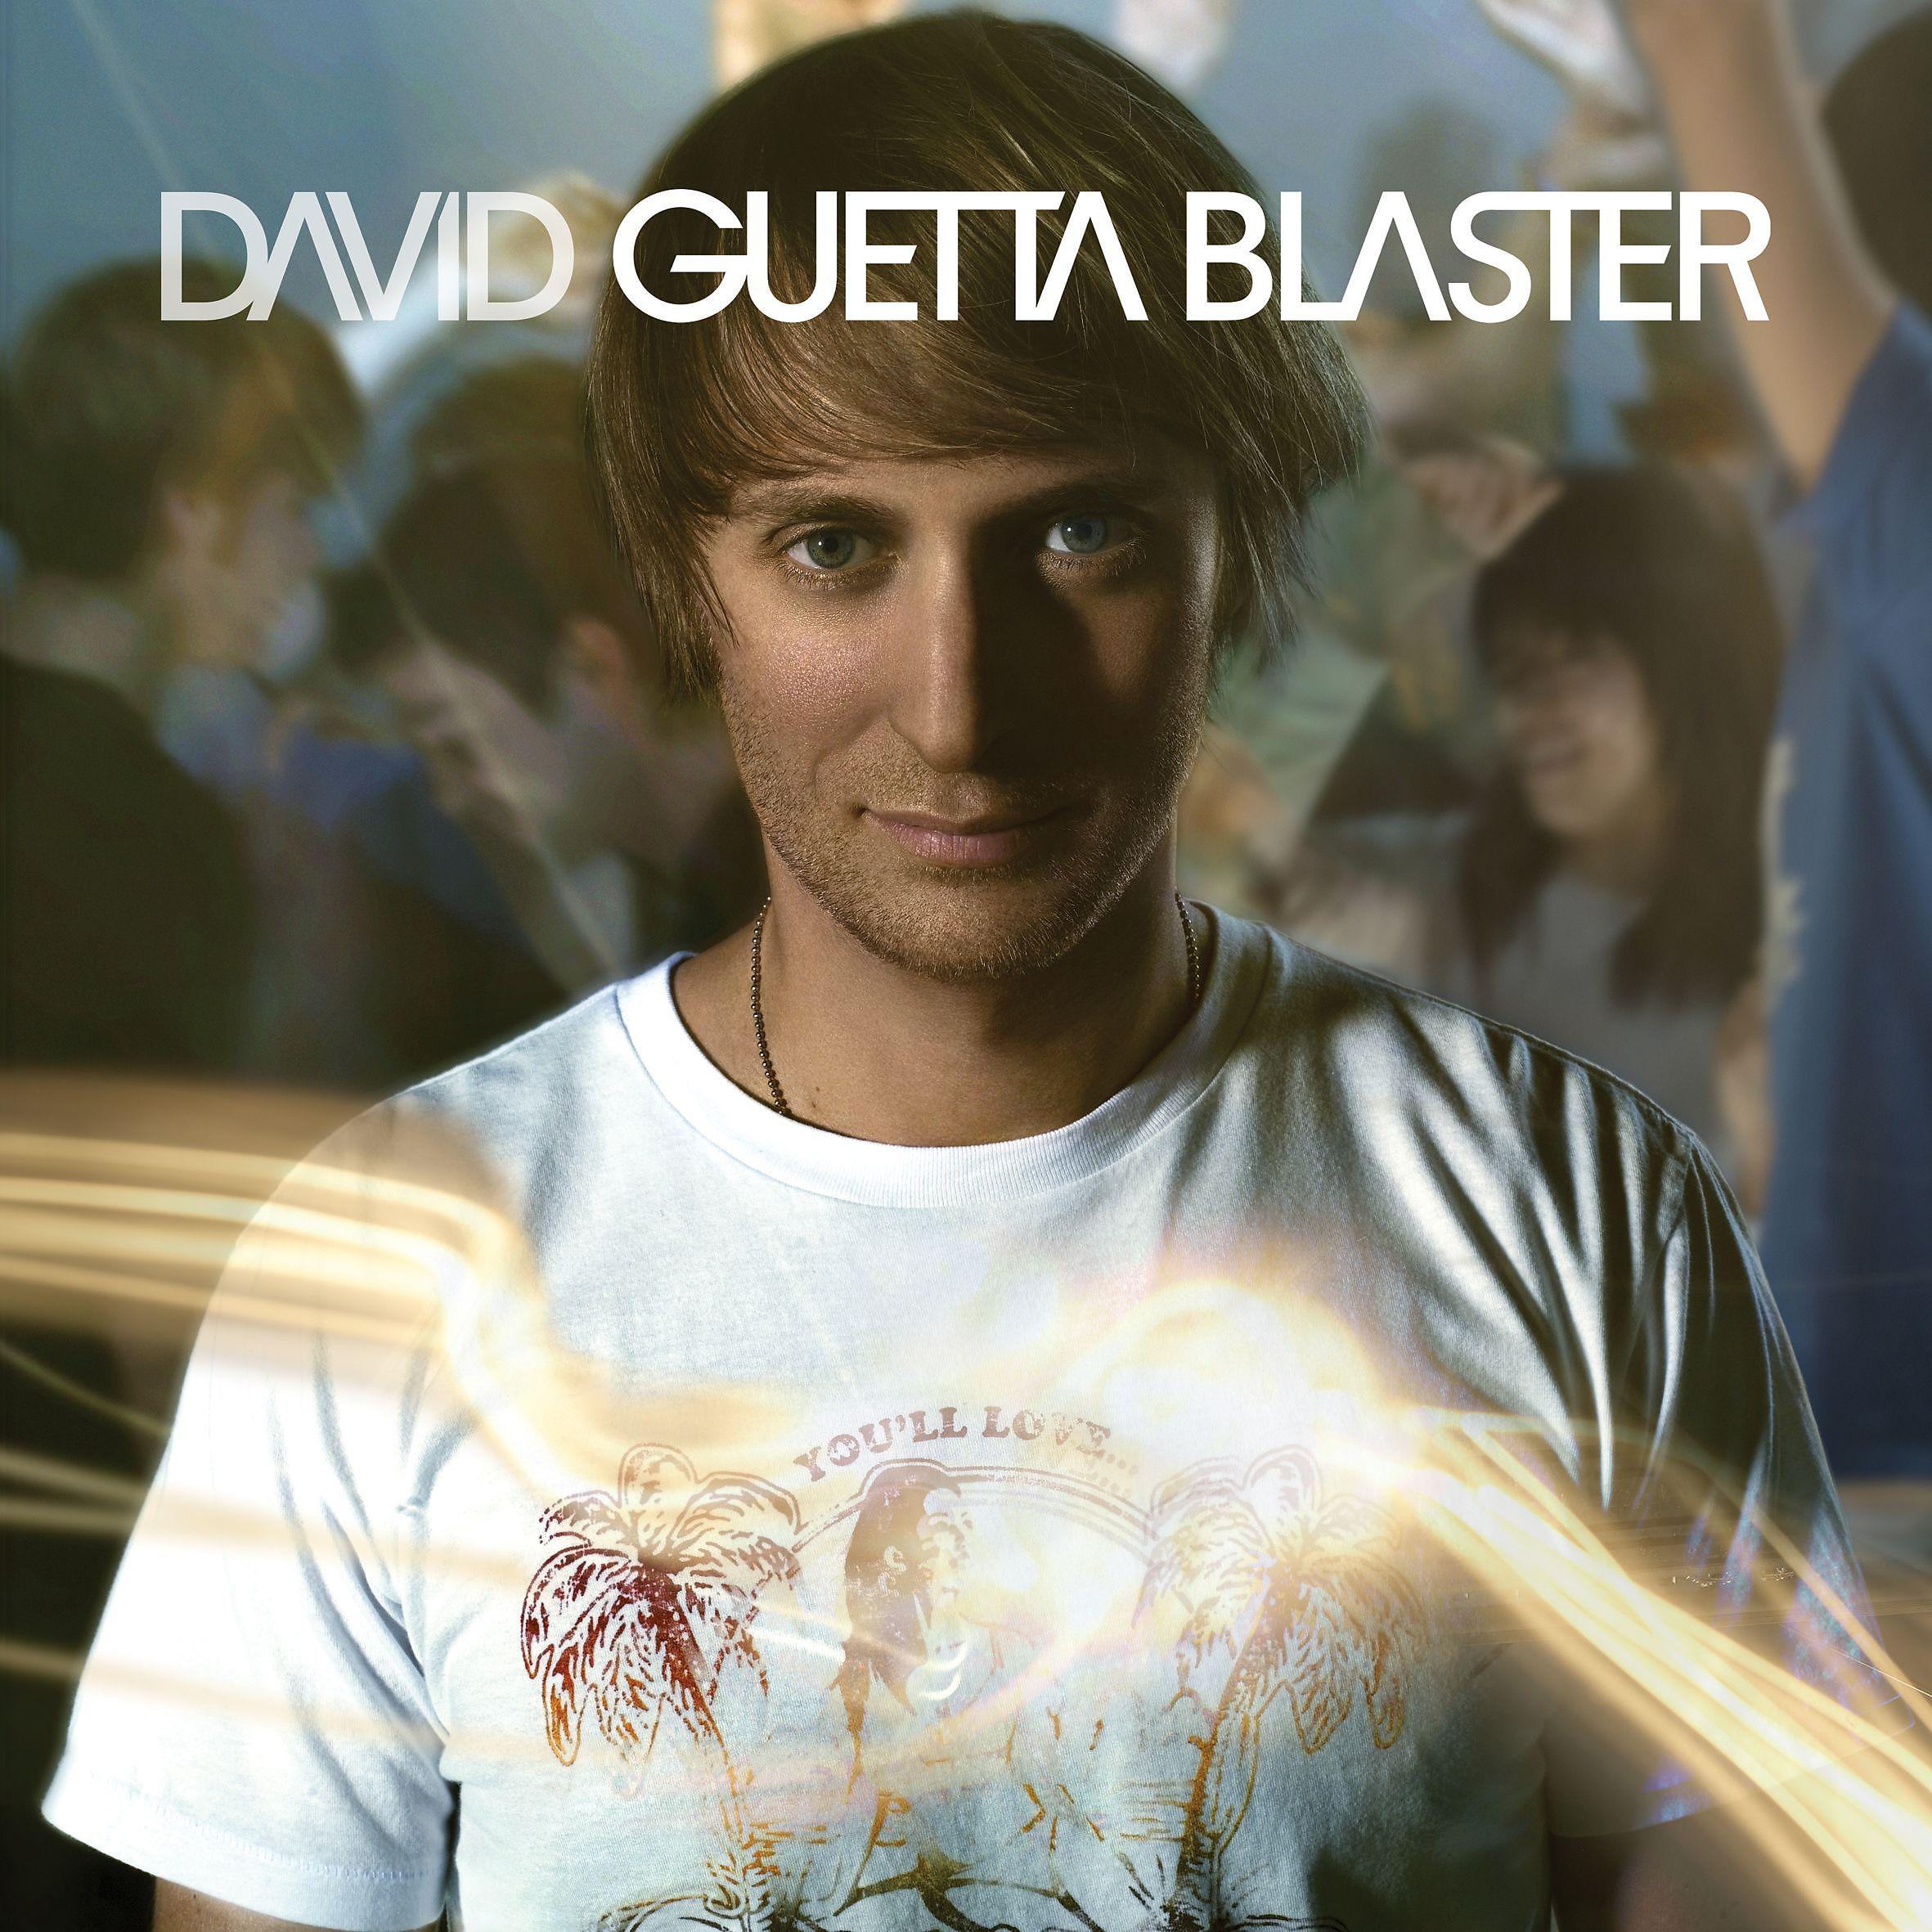 David guetta world is mine. Guetta David "Guetta Blaster". 2004 - Guetta Blaster. David Guetta 2005. David Guetta album Blaster.